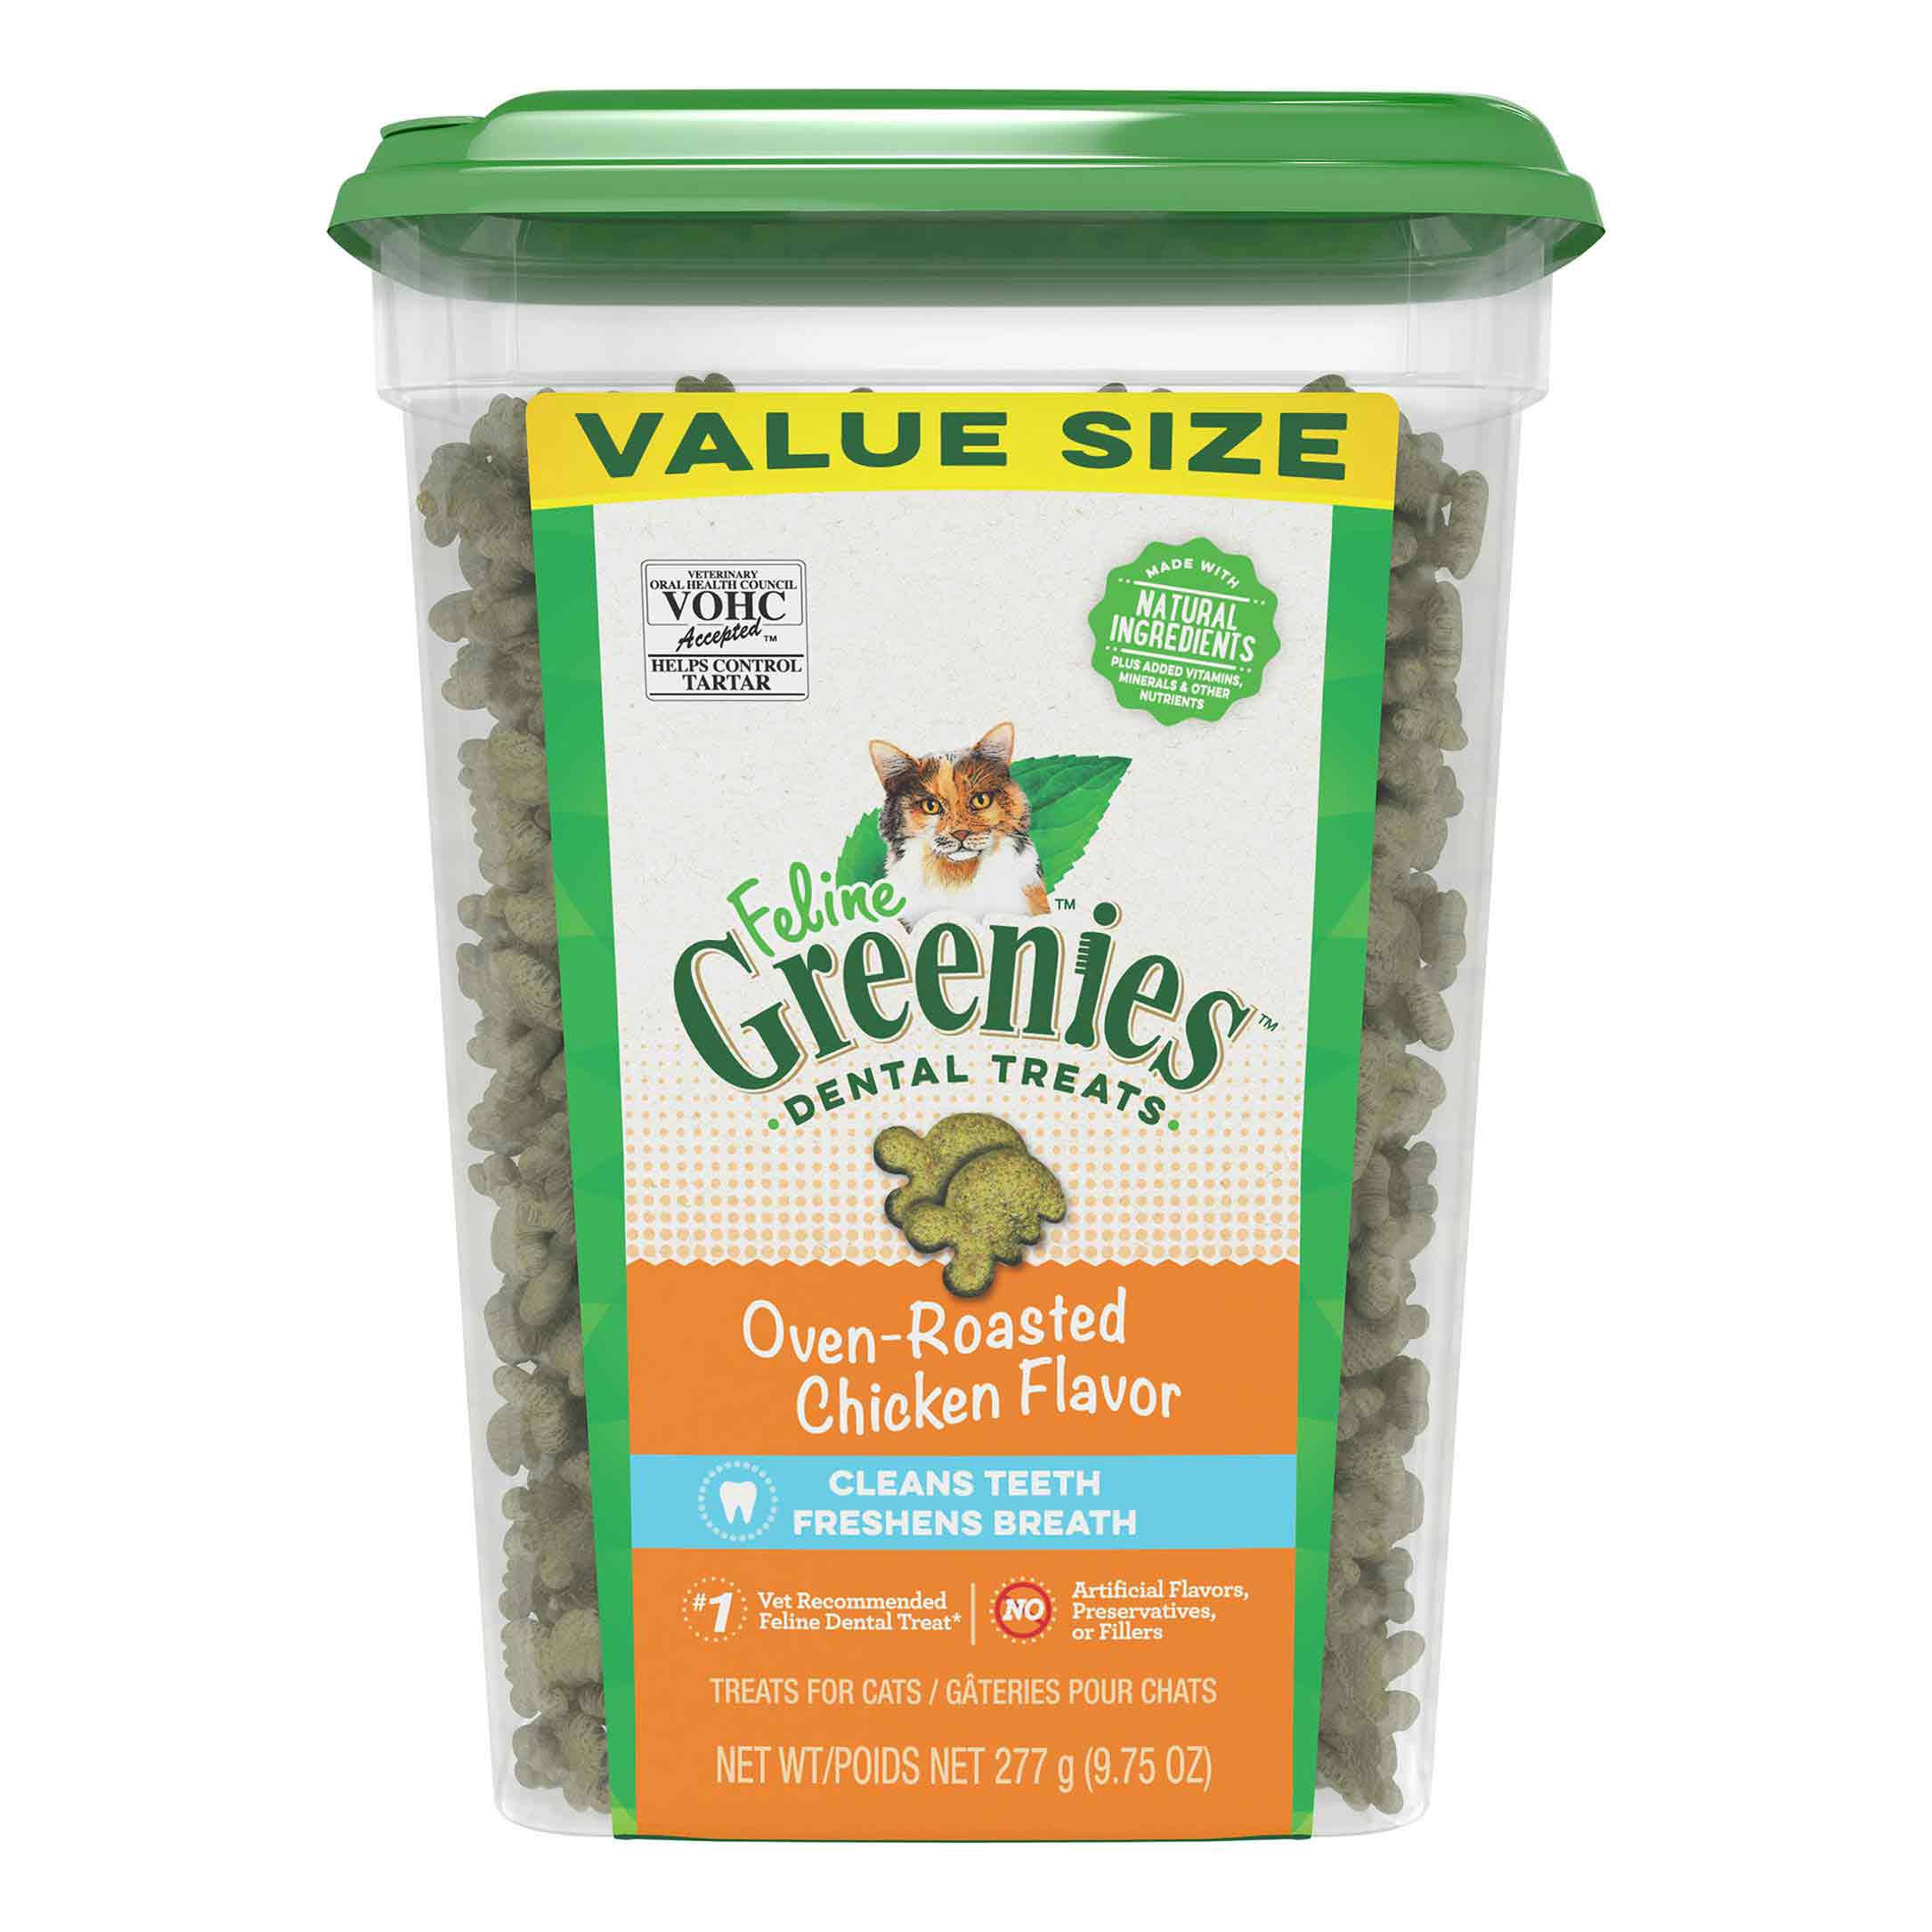 Feline Greenies Dental Treats, Oven-Roasted Chicken Flavor, Value Size - 277 g